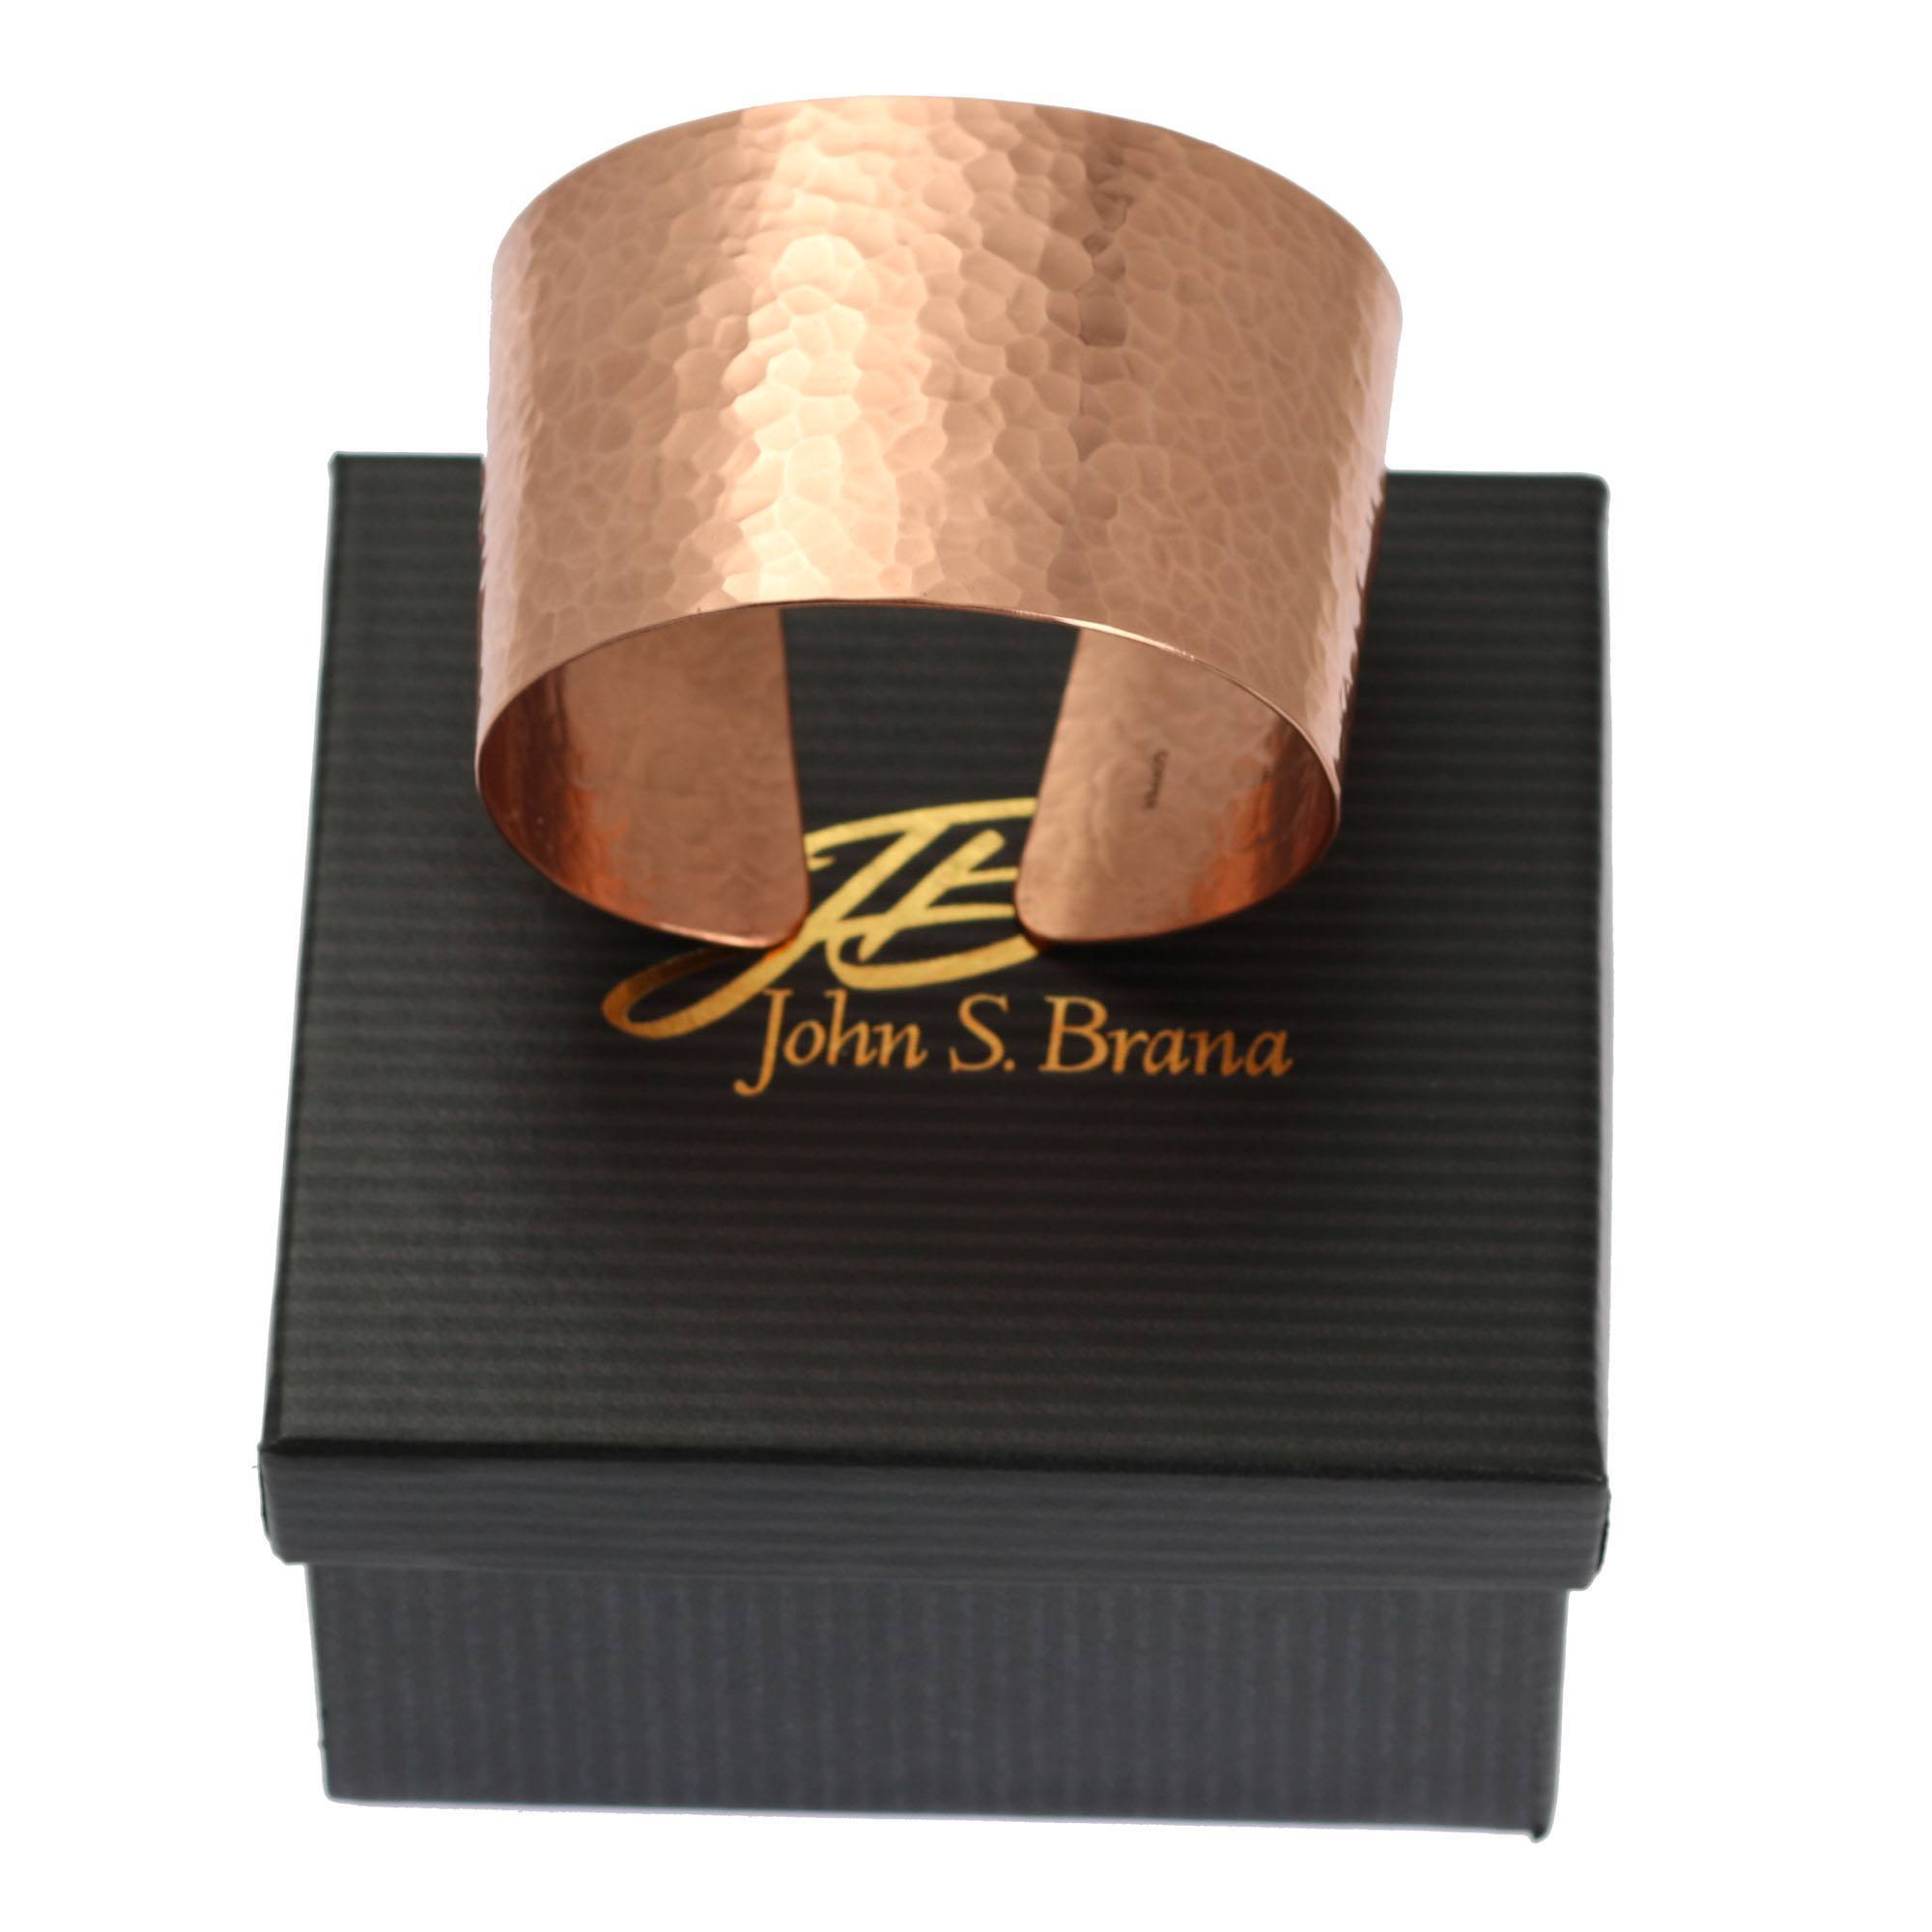 Hammered Copper Cuff Bracelet in Gift Box